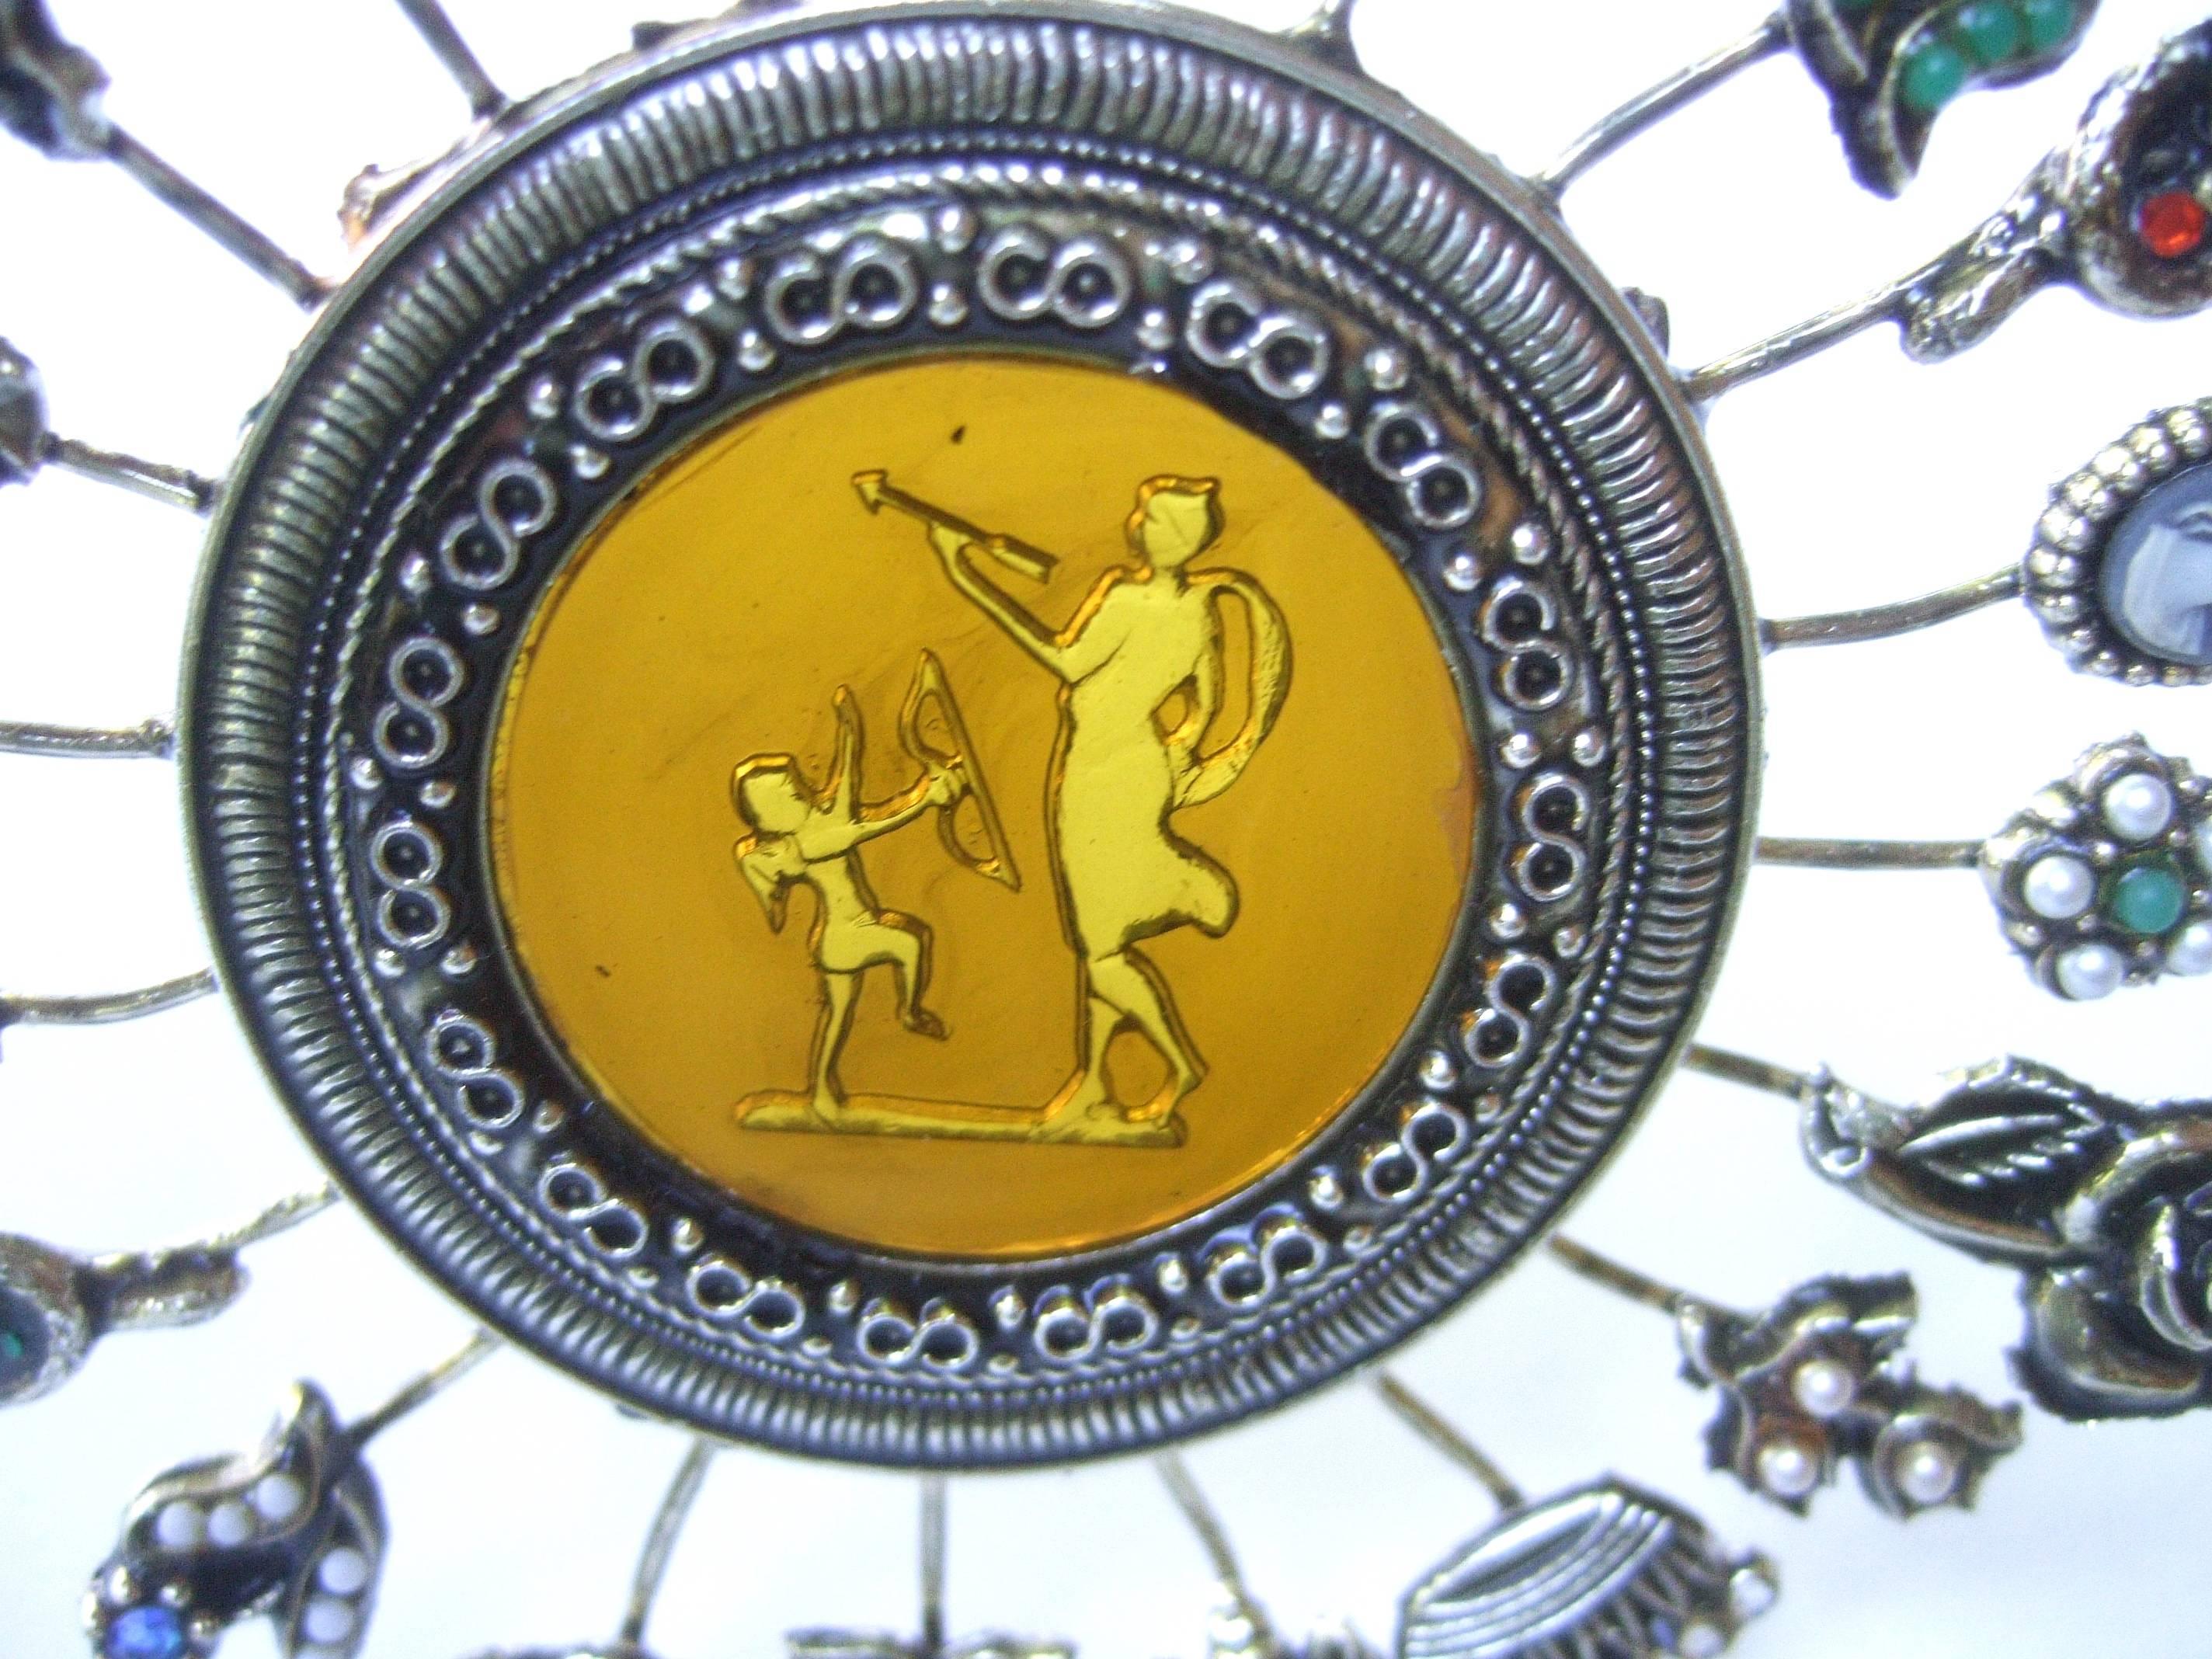 Baroque Revival Massive Circular Medallion Lucite Intaglio Brooch circa 1970s